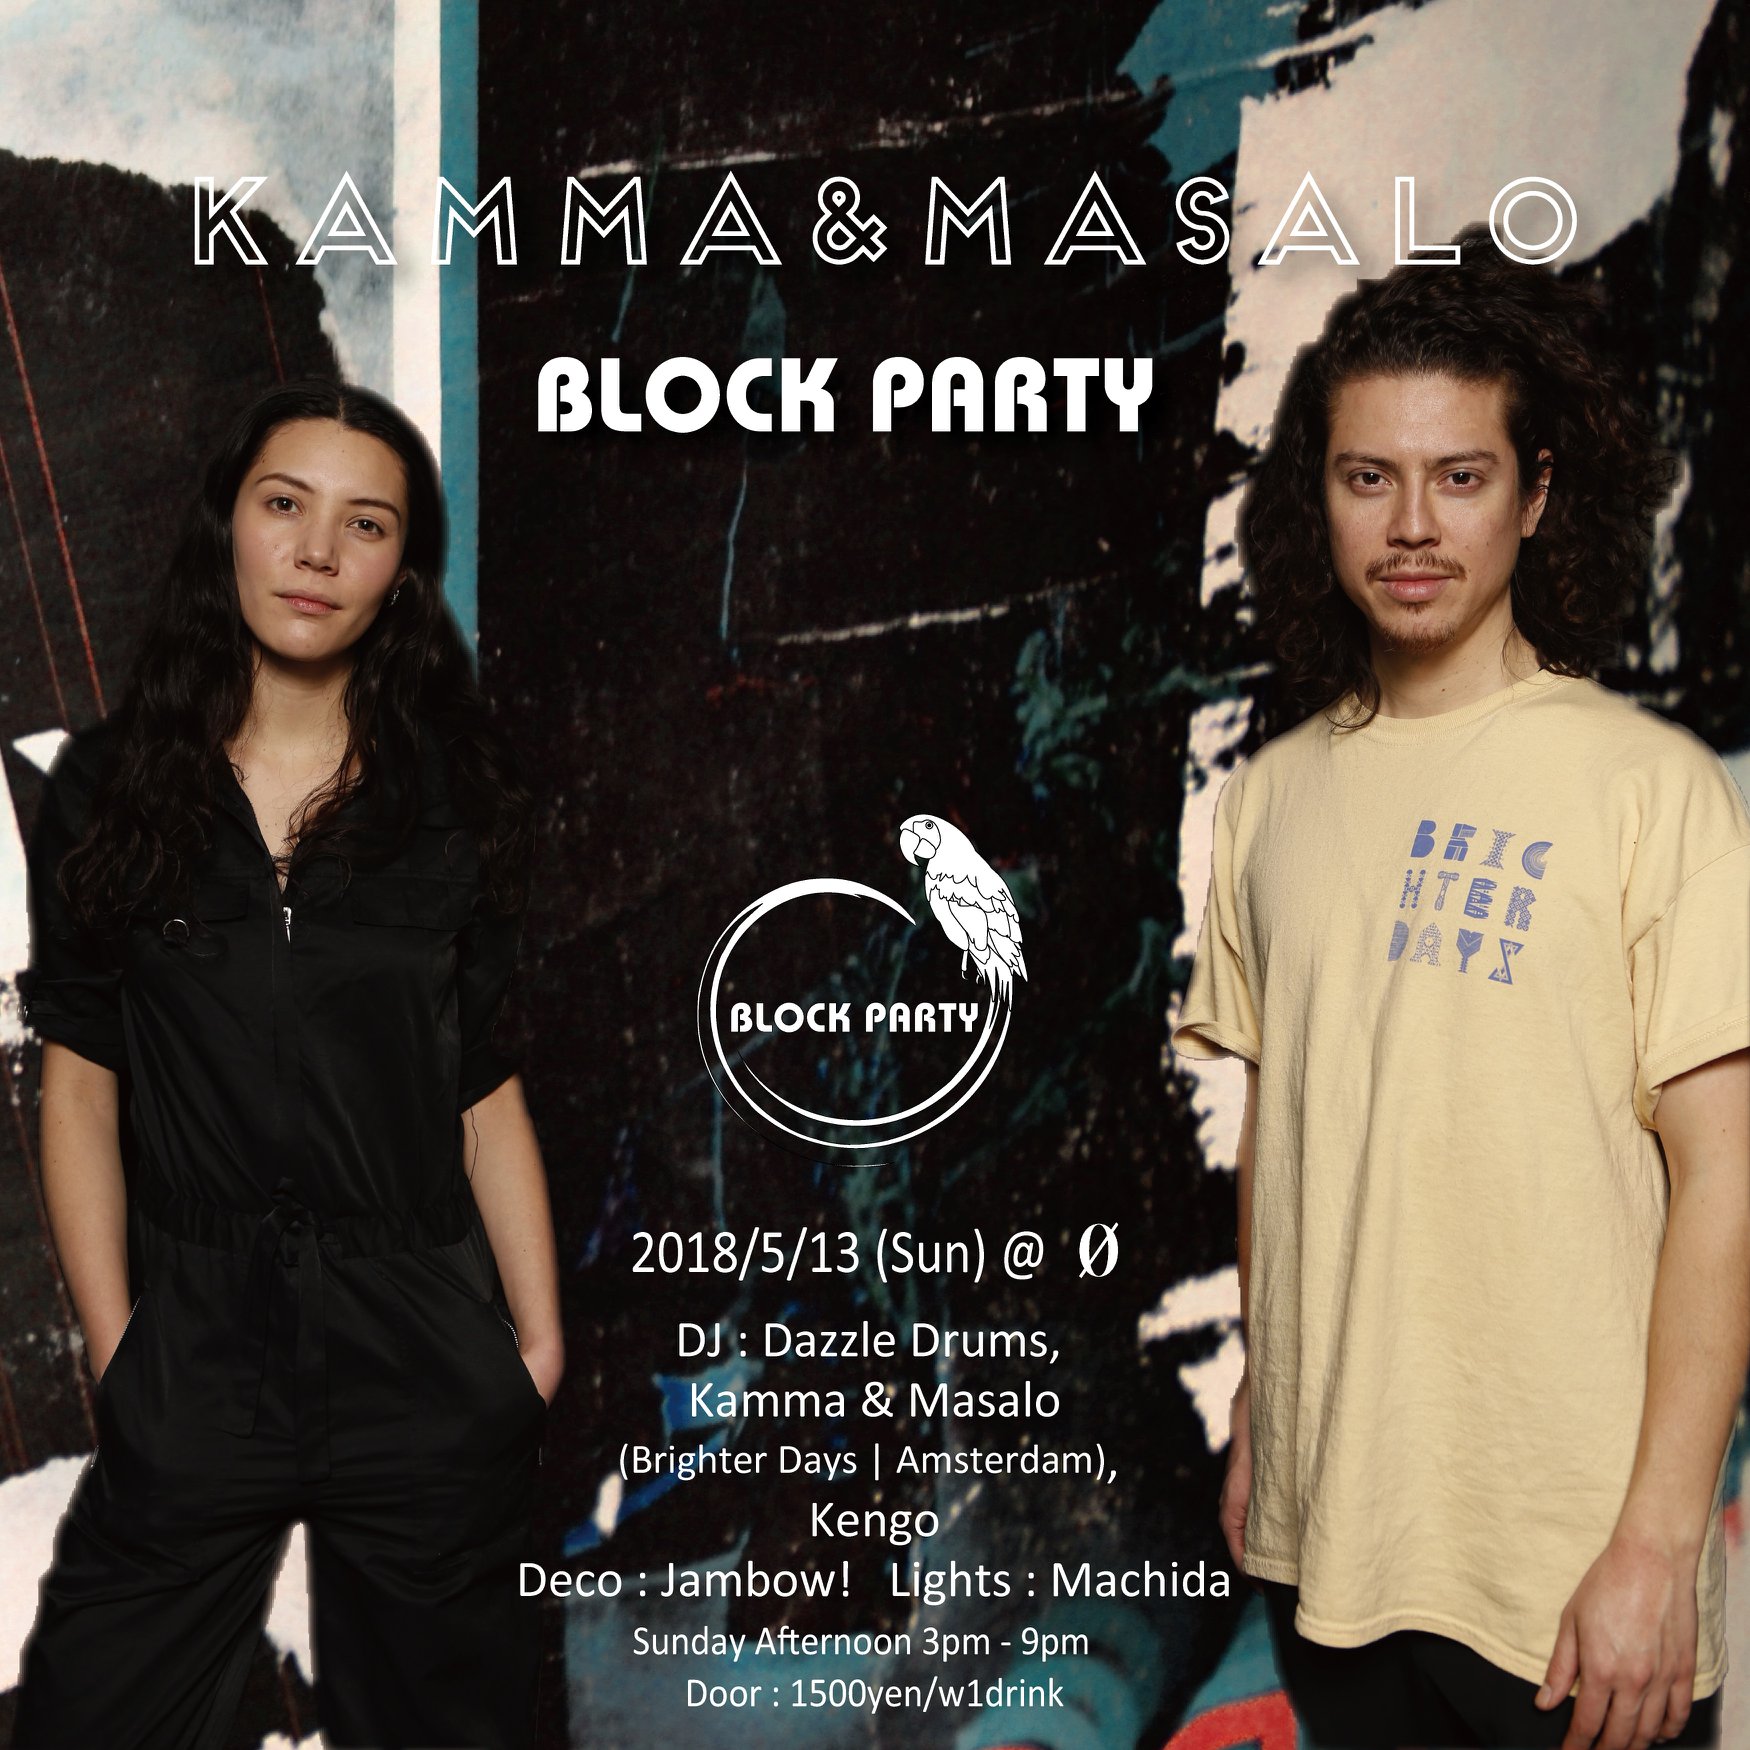 Block Party “Kamma & Masalo”